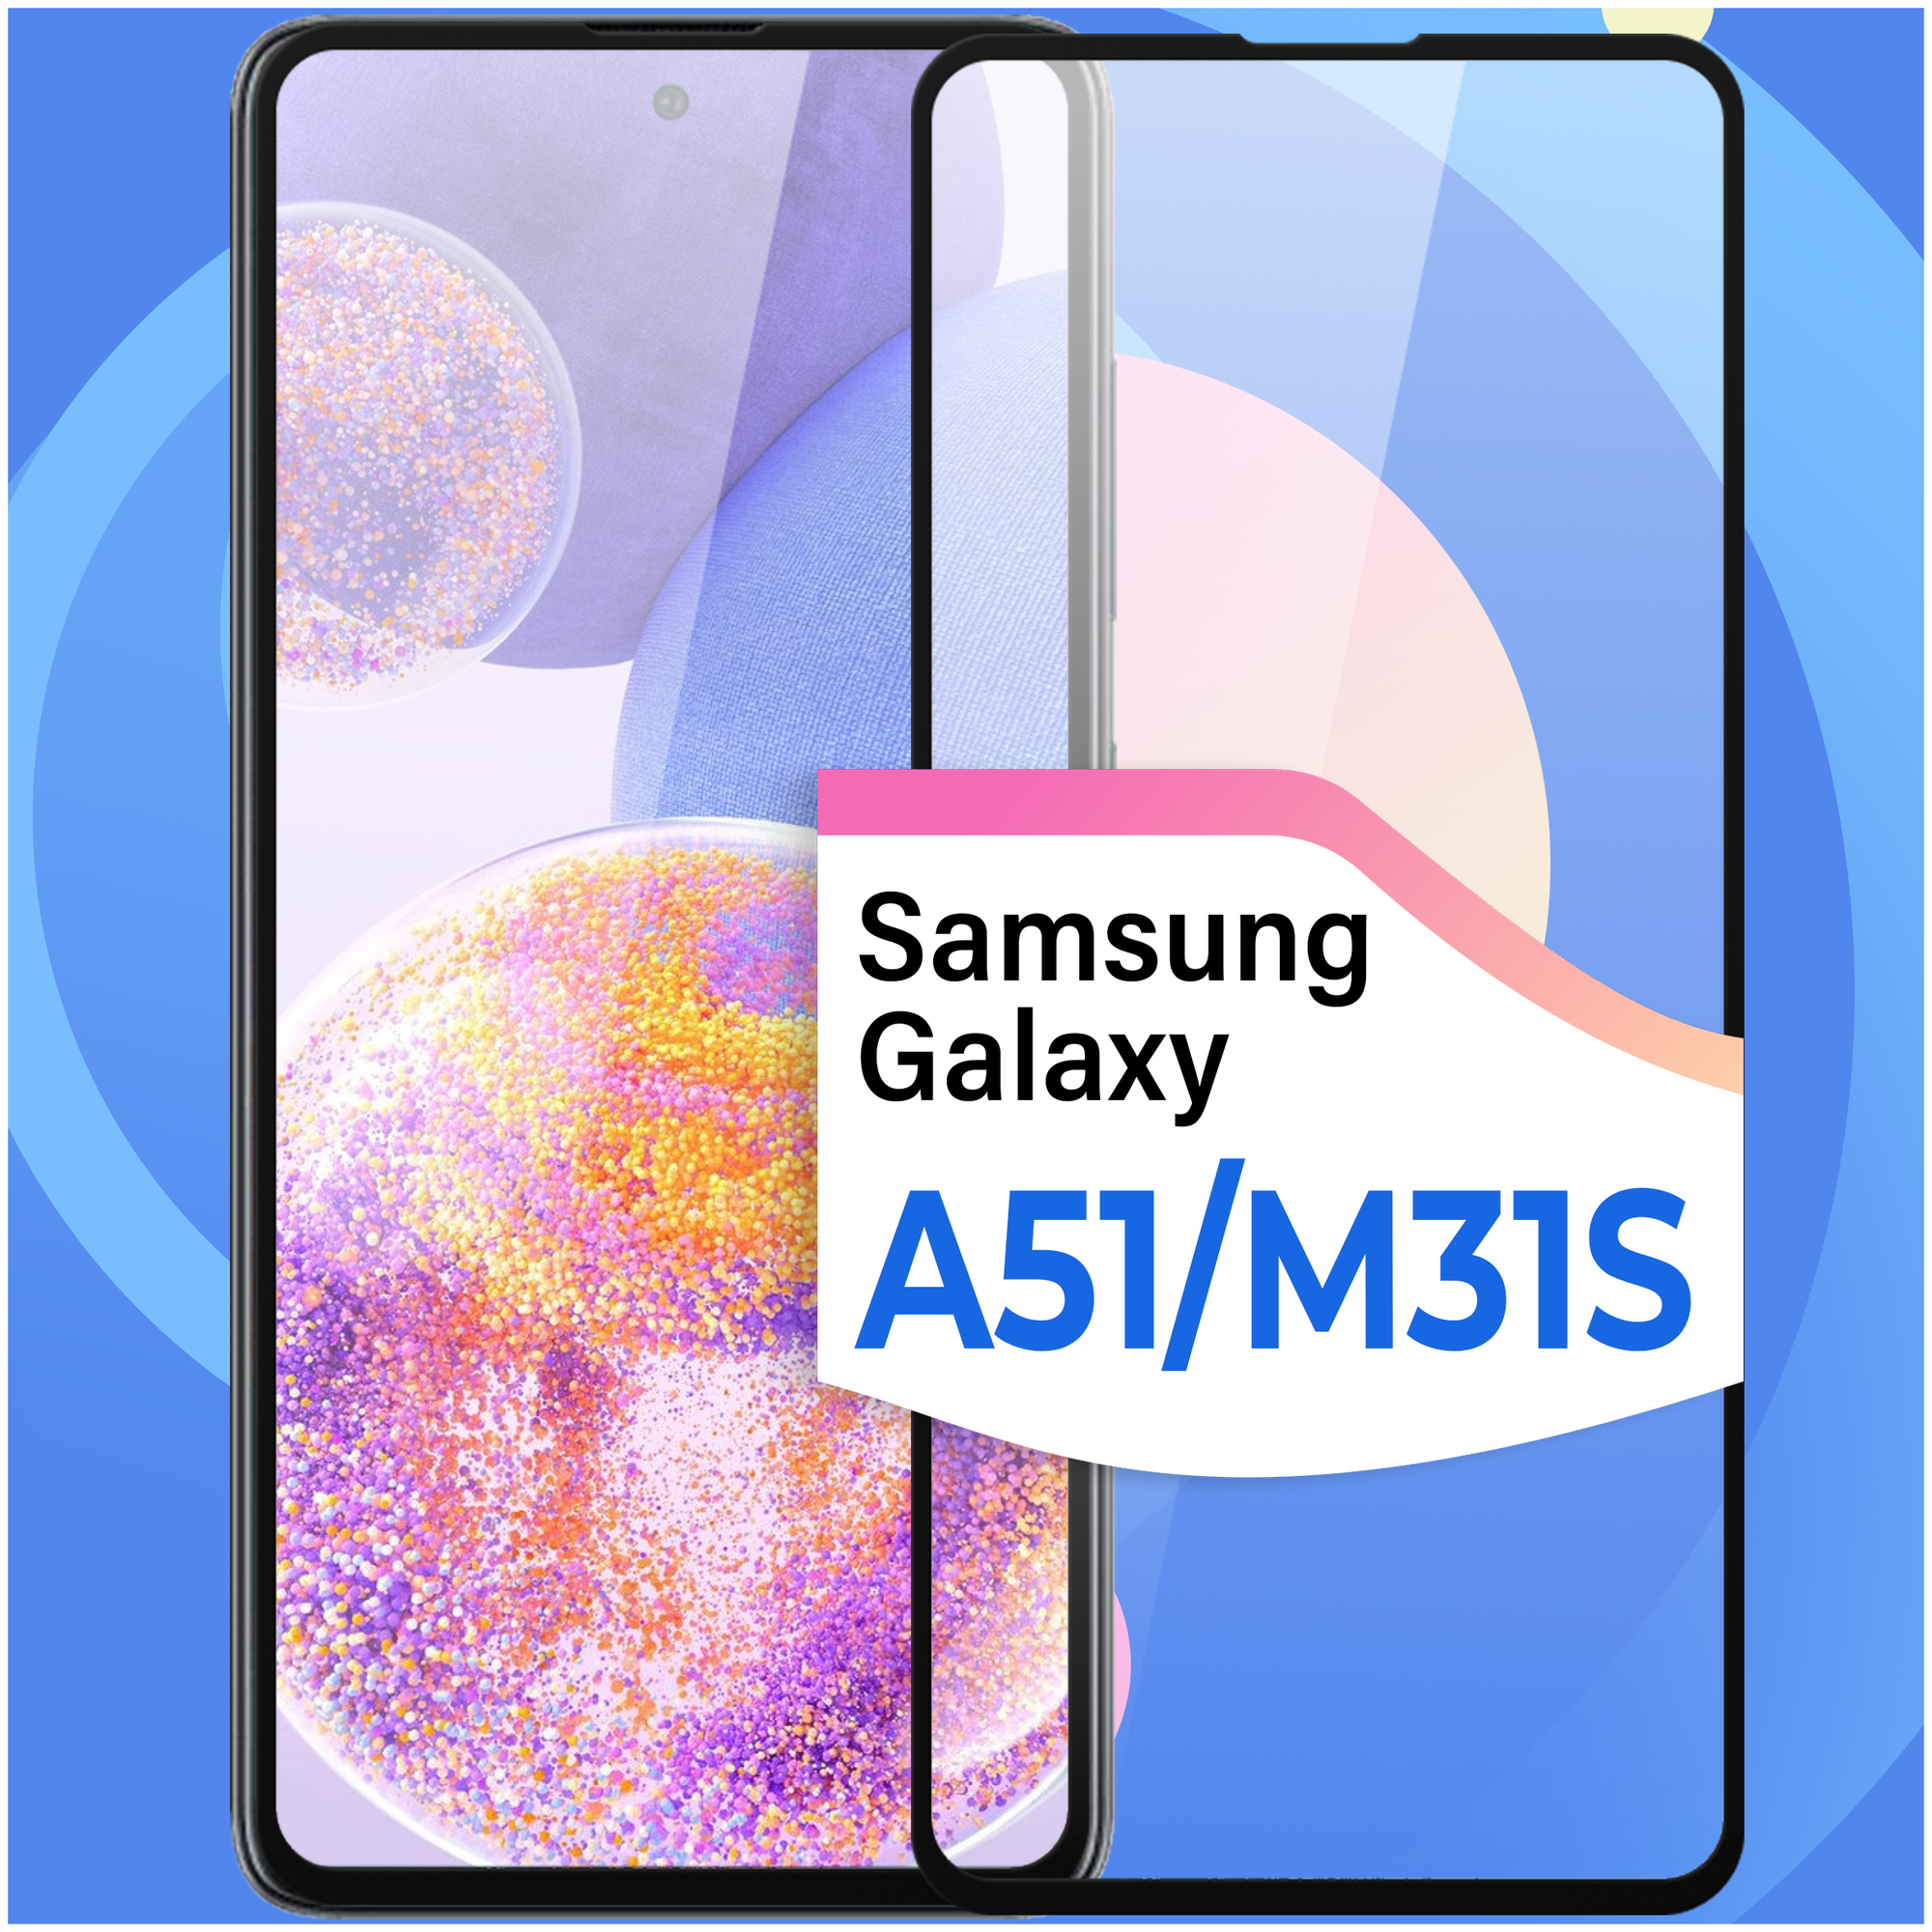 Противоударное стекло дляартфона Samsung Galaxy A51 и Samsung Galaxy M31S / Защитное глянцевое стекло на телефон Самсунг Галакси А51 и М31С